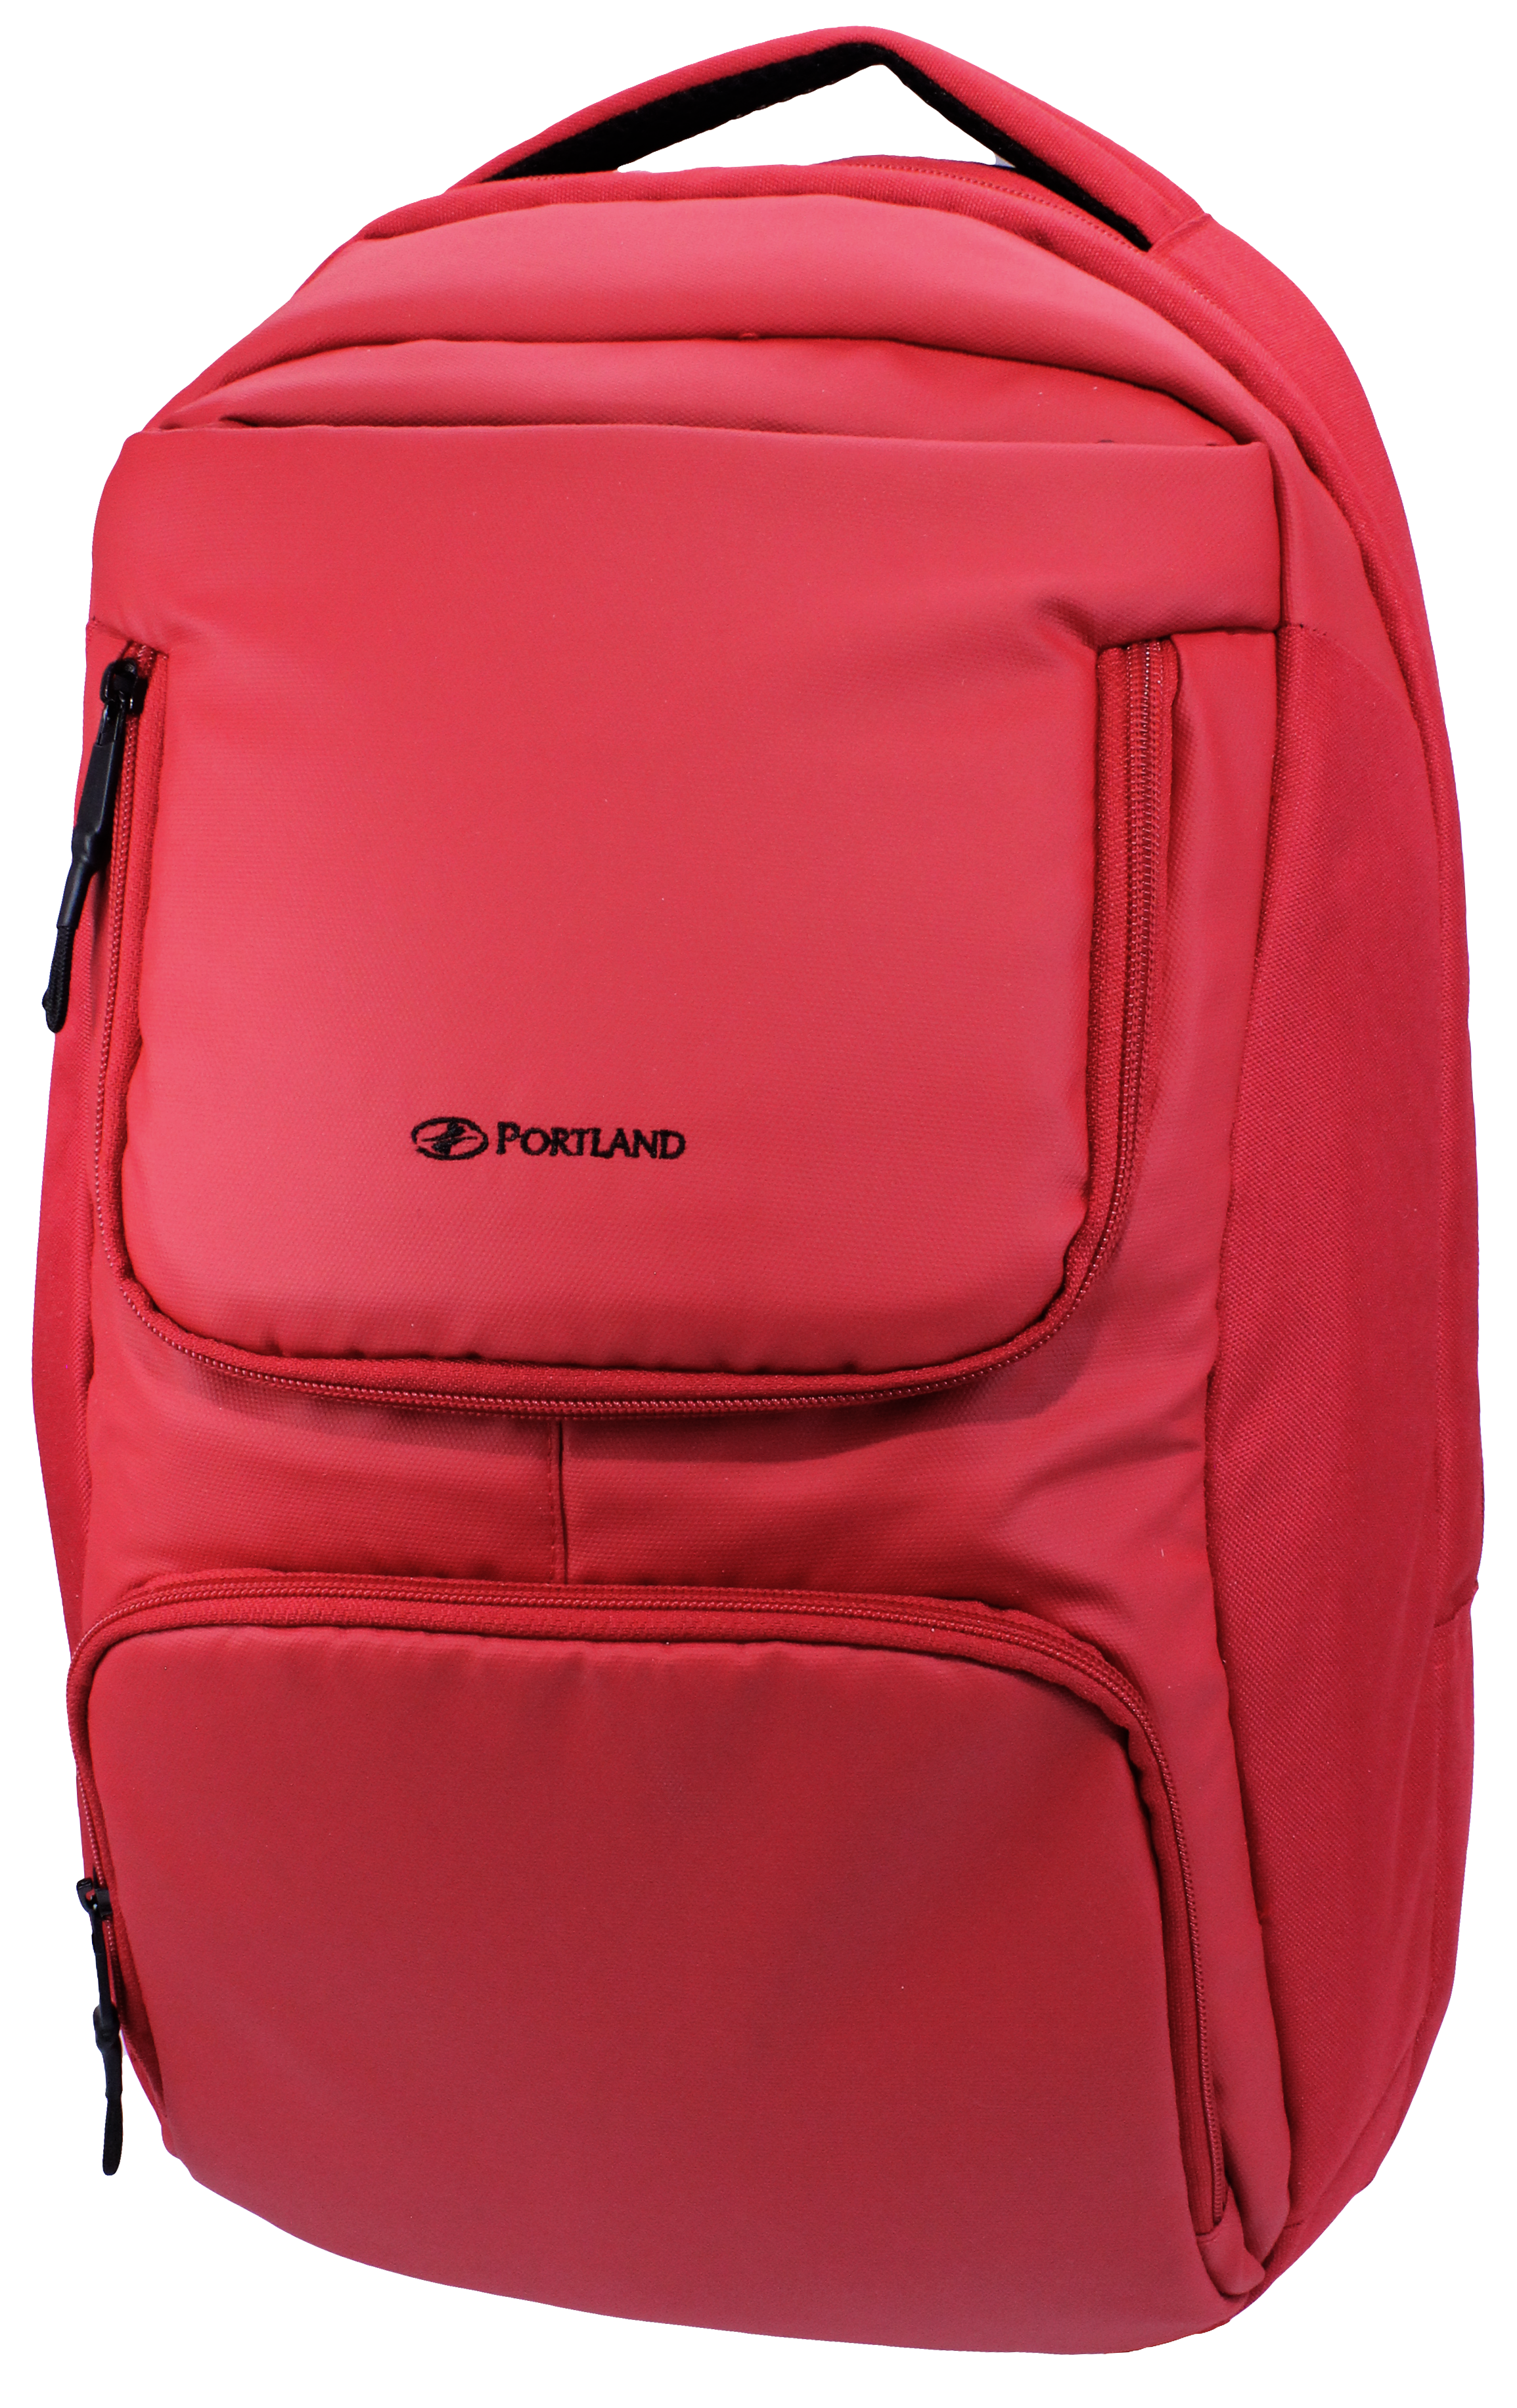 Portland Laptop Backpack Red